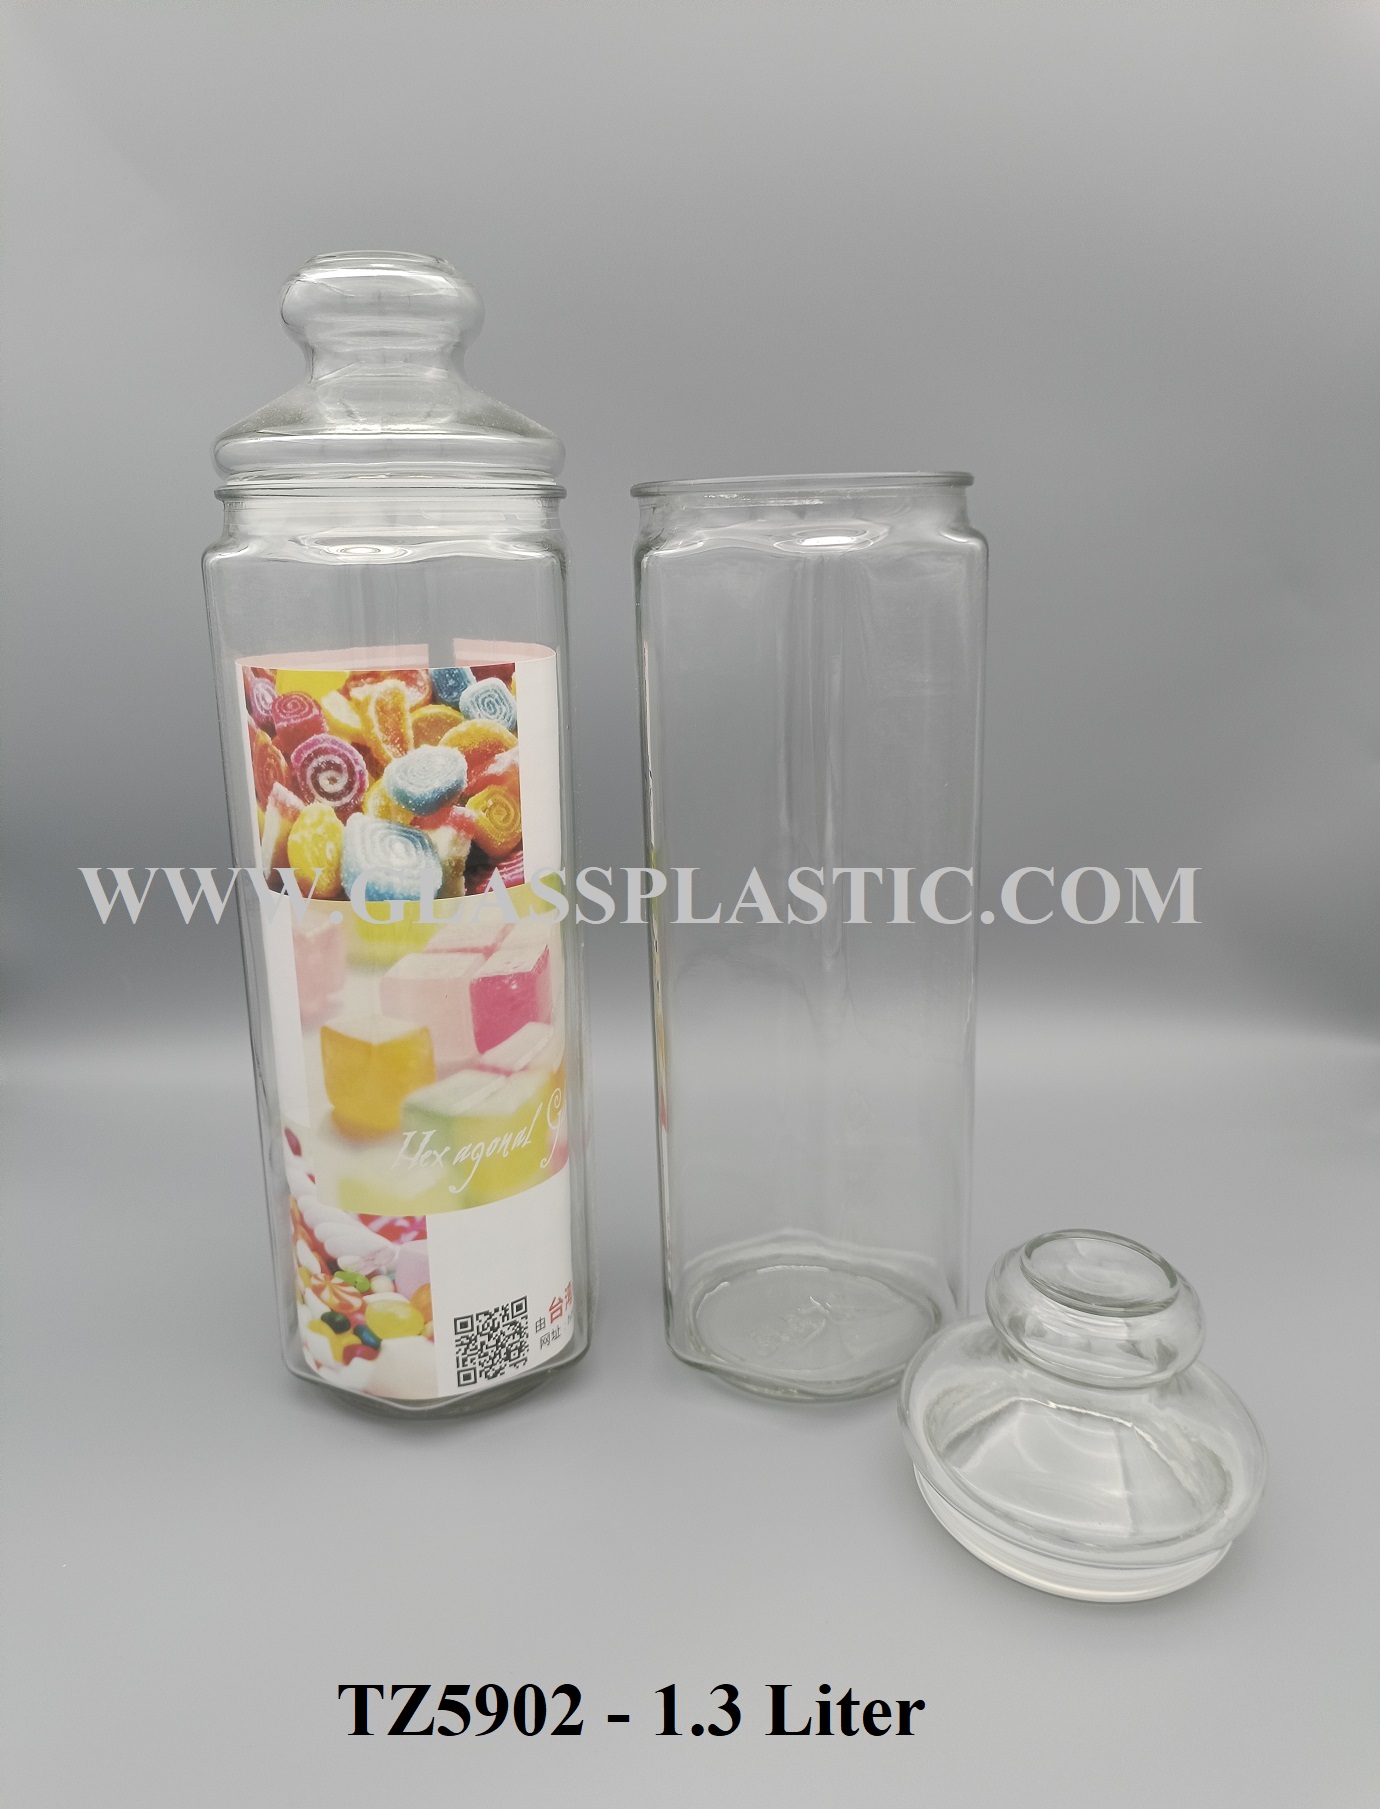 1.3 Liter Hexagon Air-Tight Glass Jar